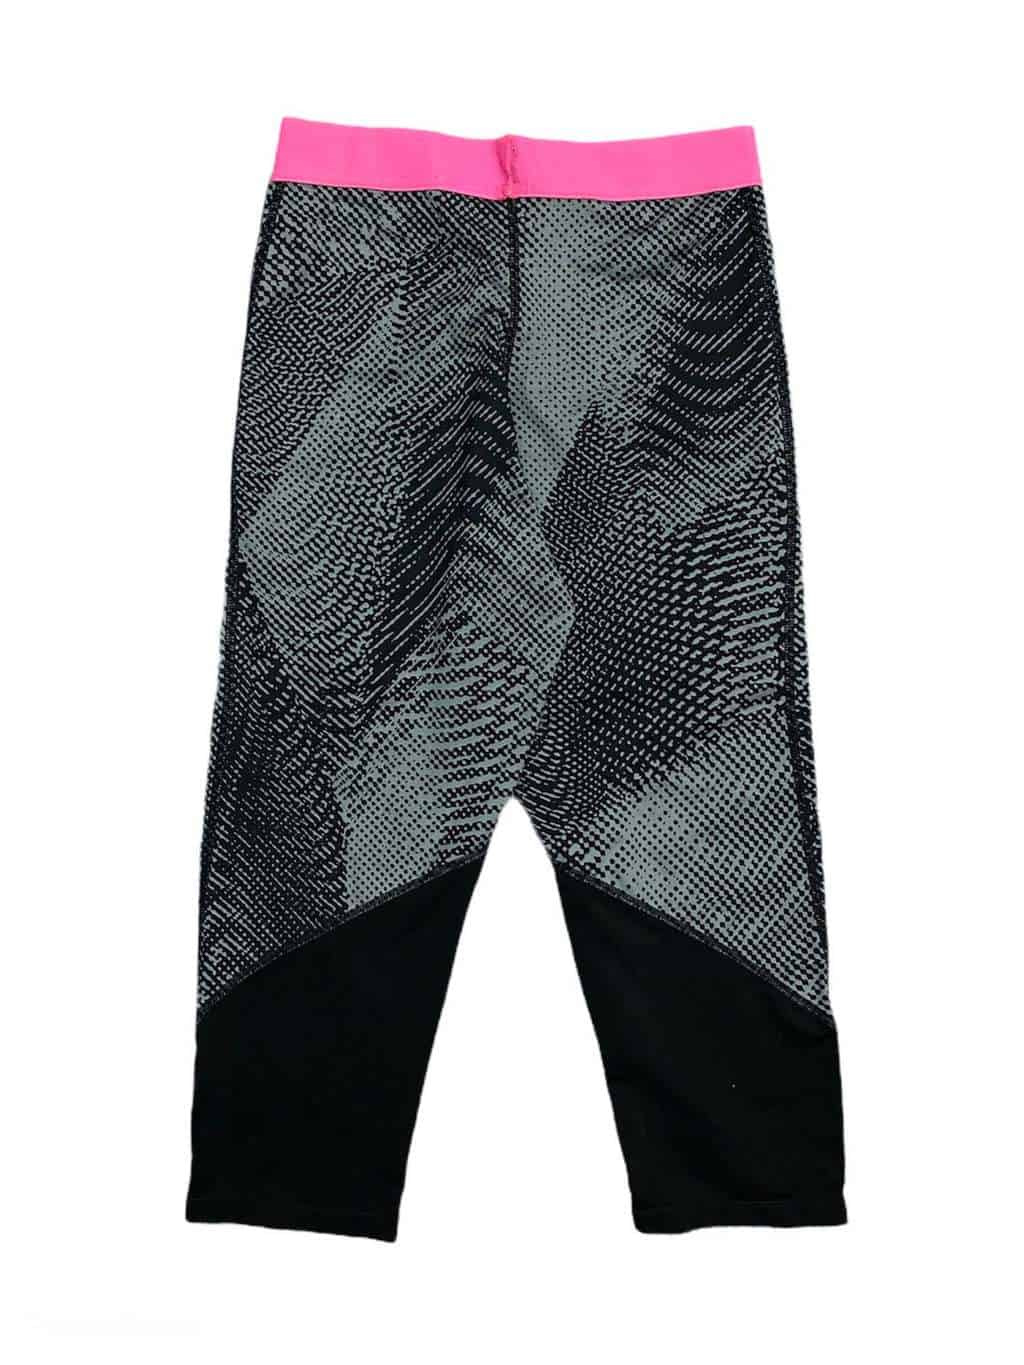 Women's Grey Leggings Shorts. Nike UK